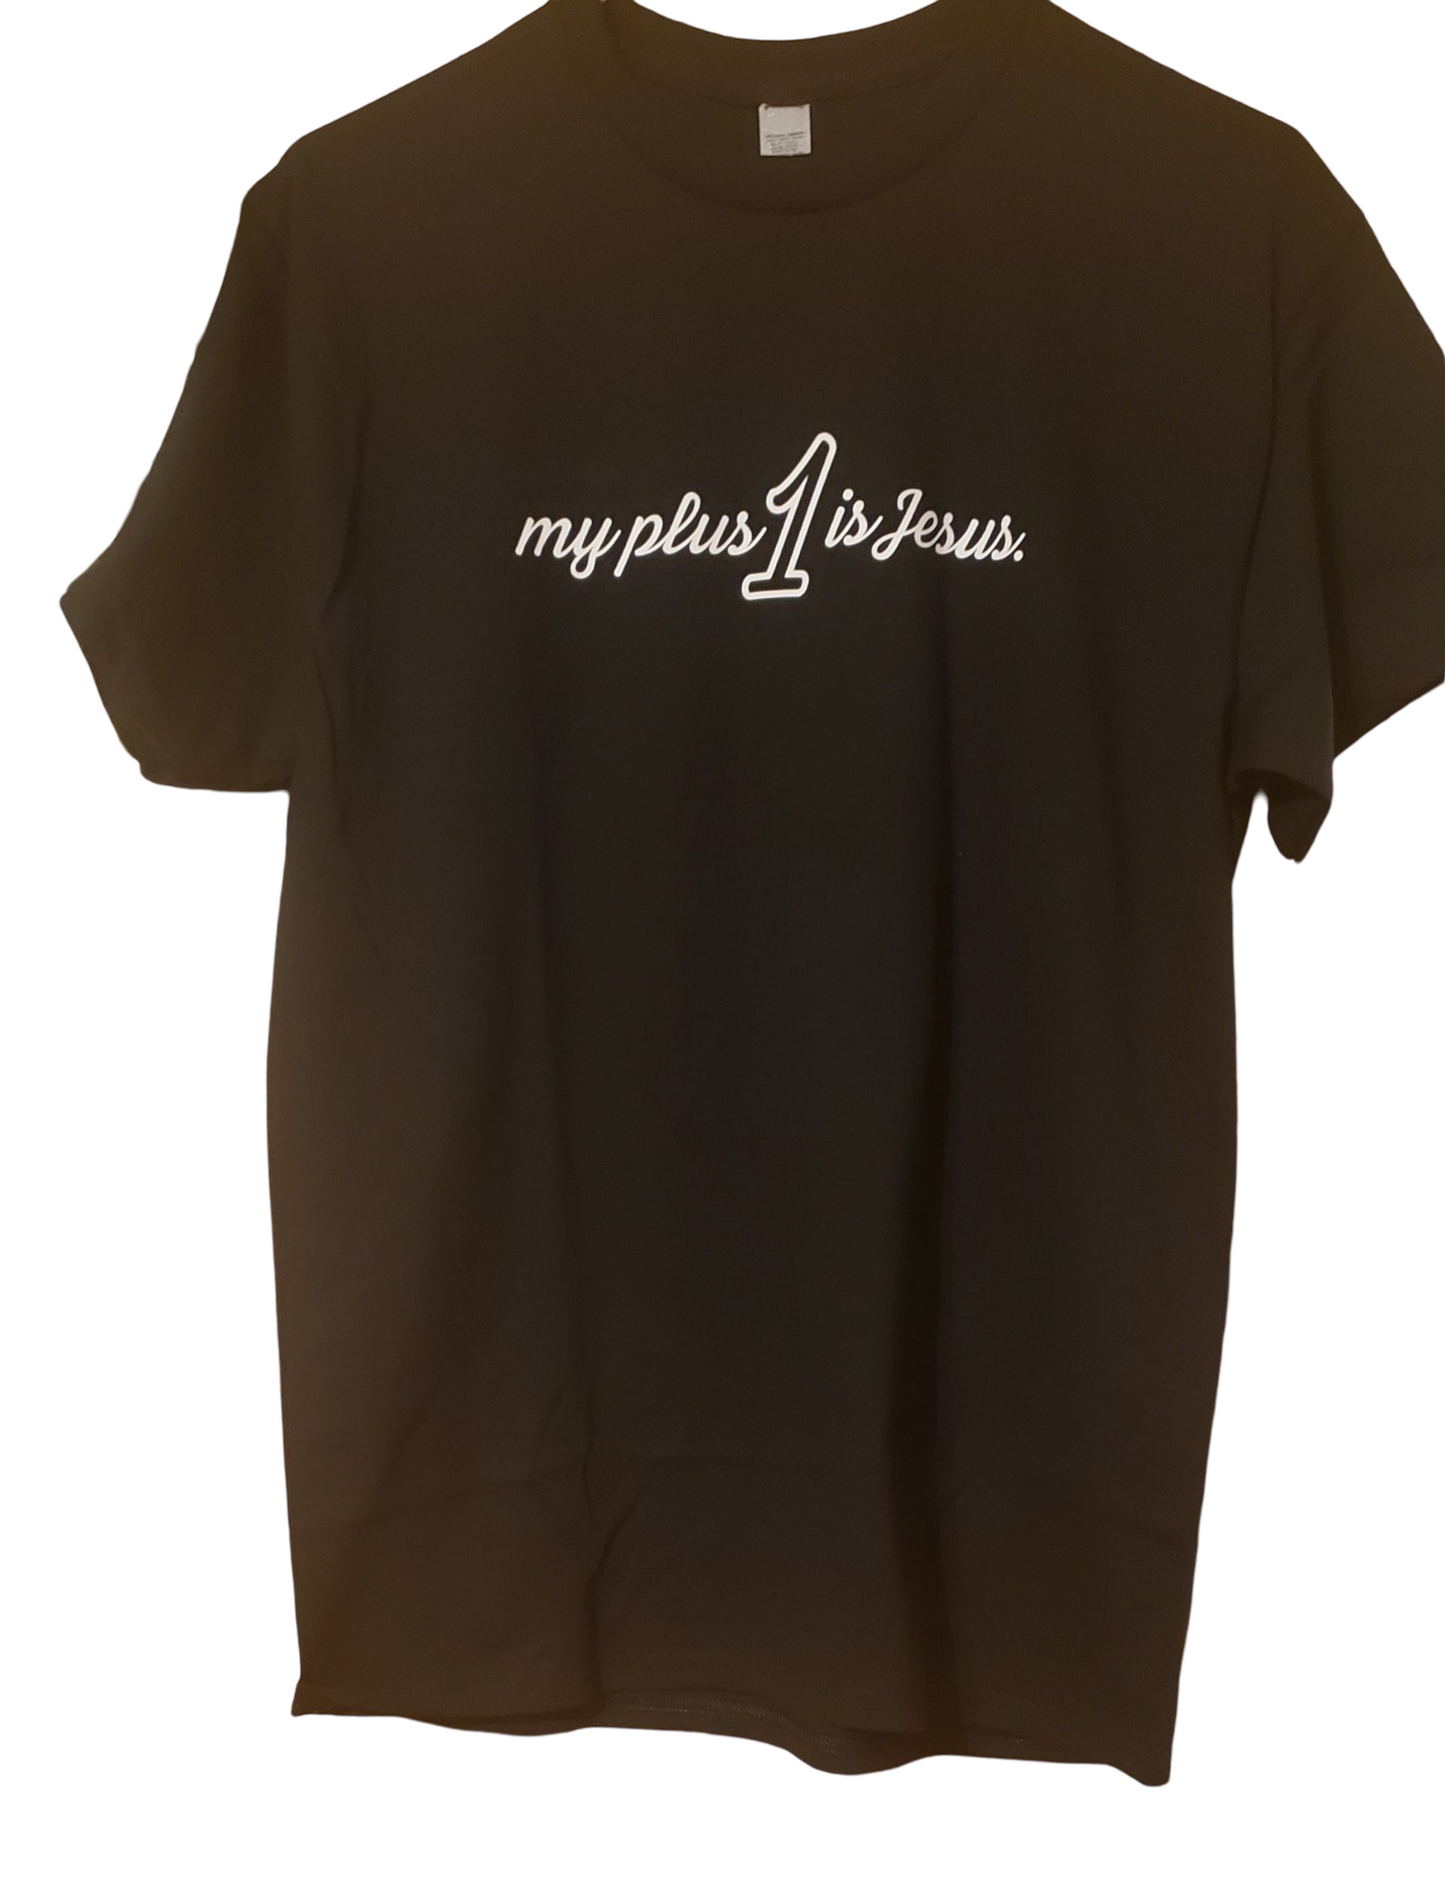 Jesus is my plus one t-shirt